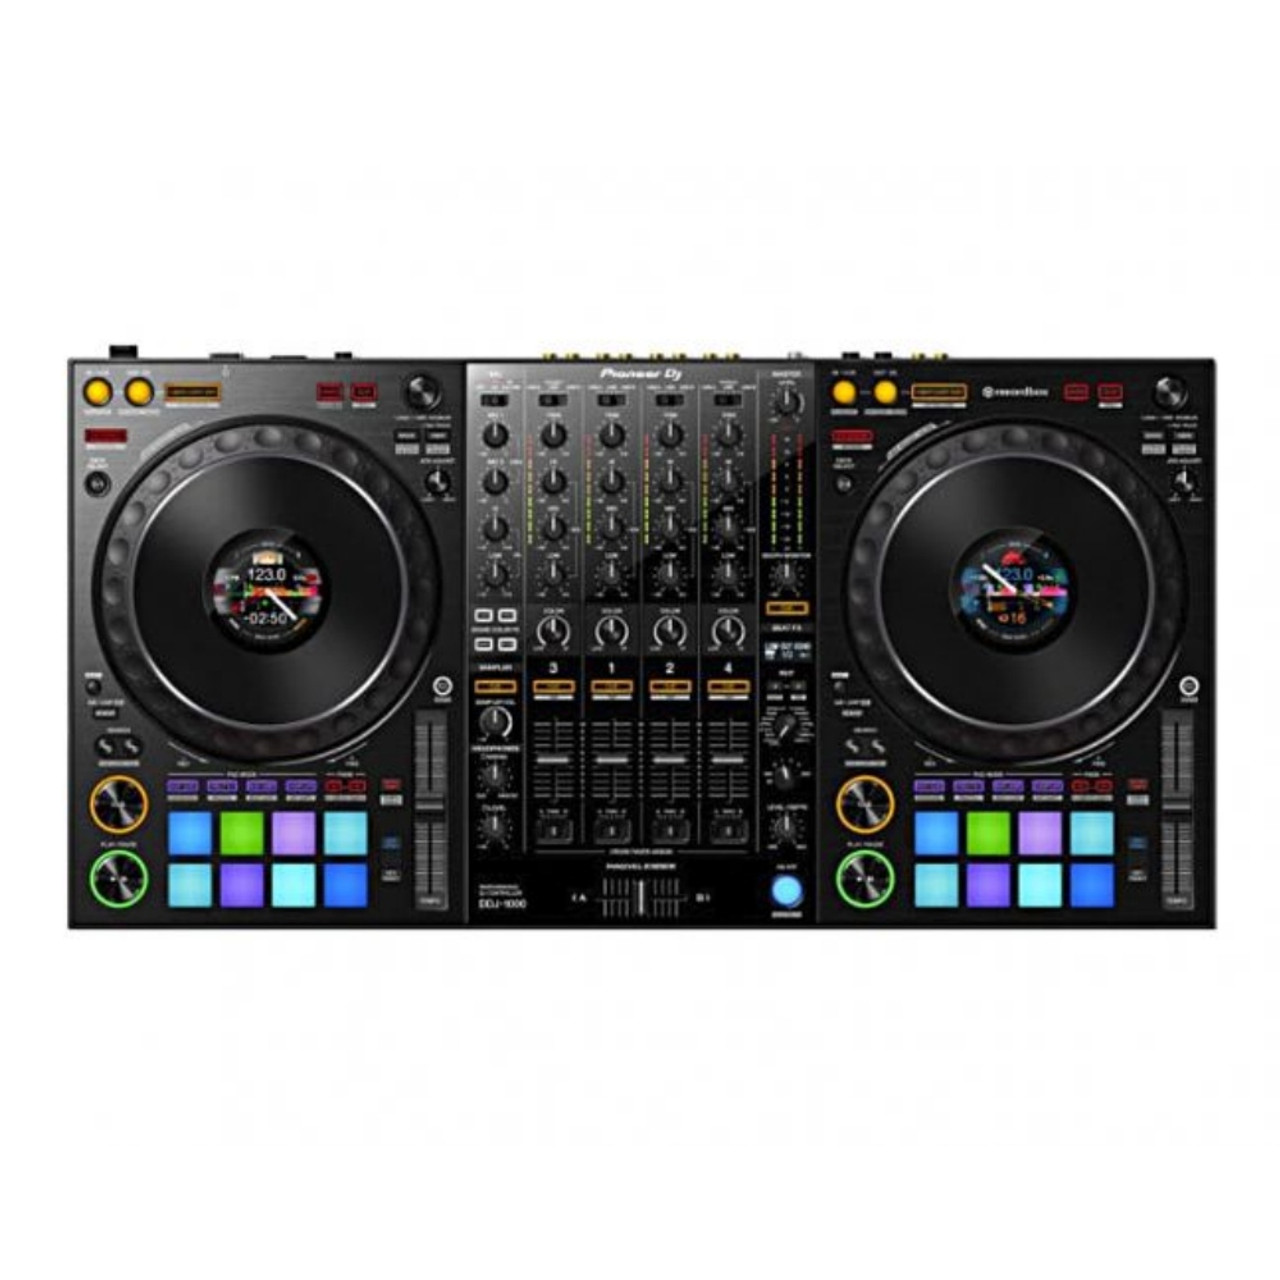 PIONEER DDJ-1000 4 Channel Rekordbox DJ Controller with 16 